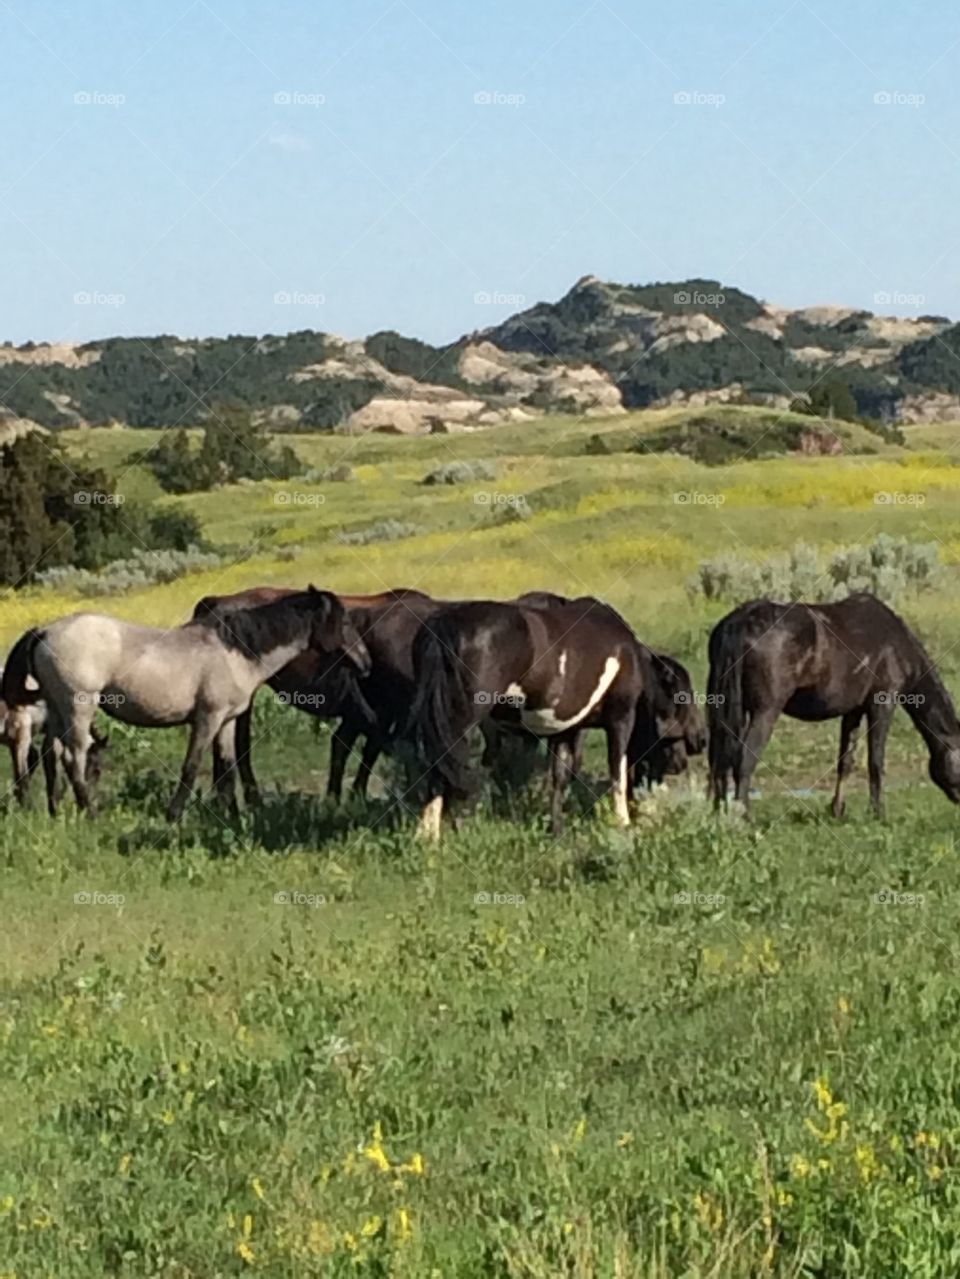 Theodore Roosevelt National Park's Wild Horses